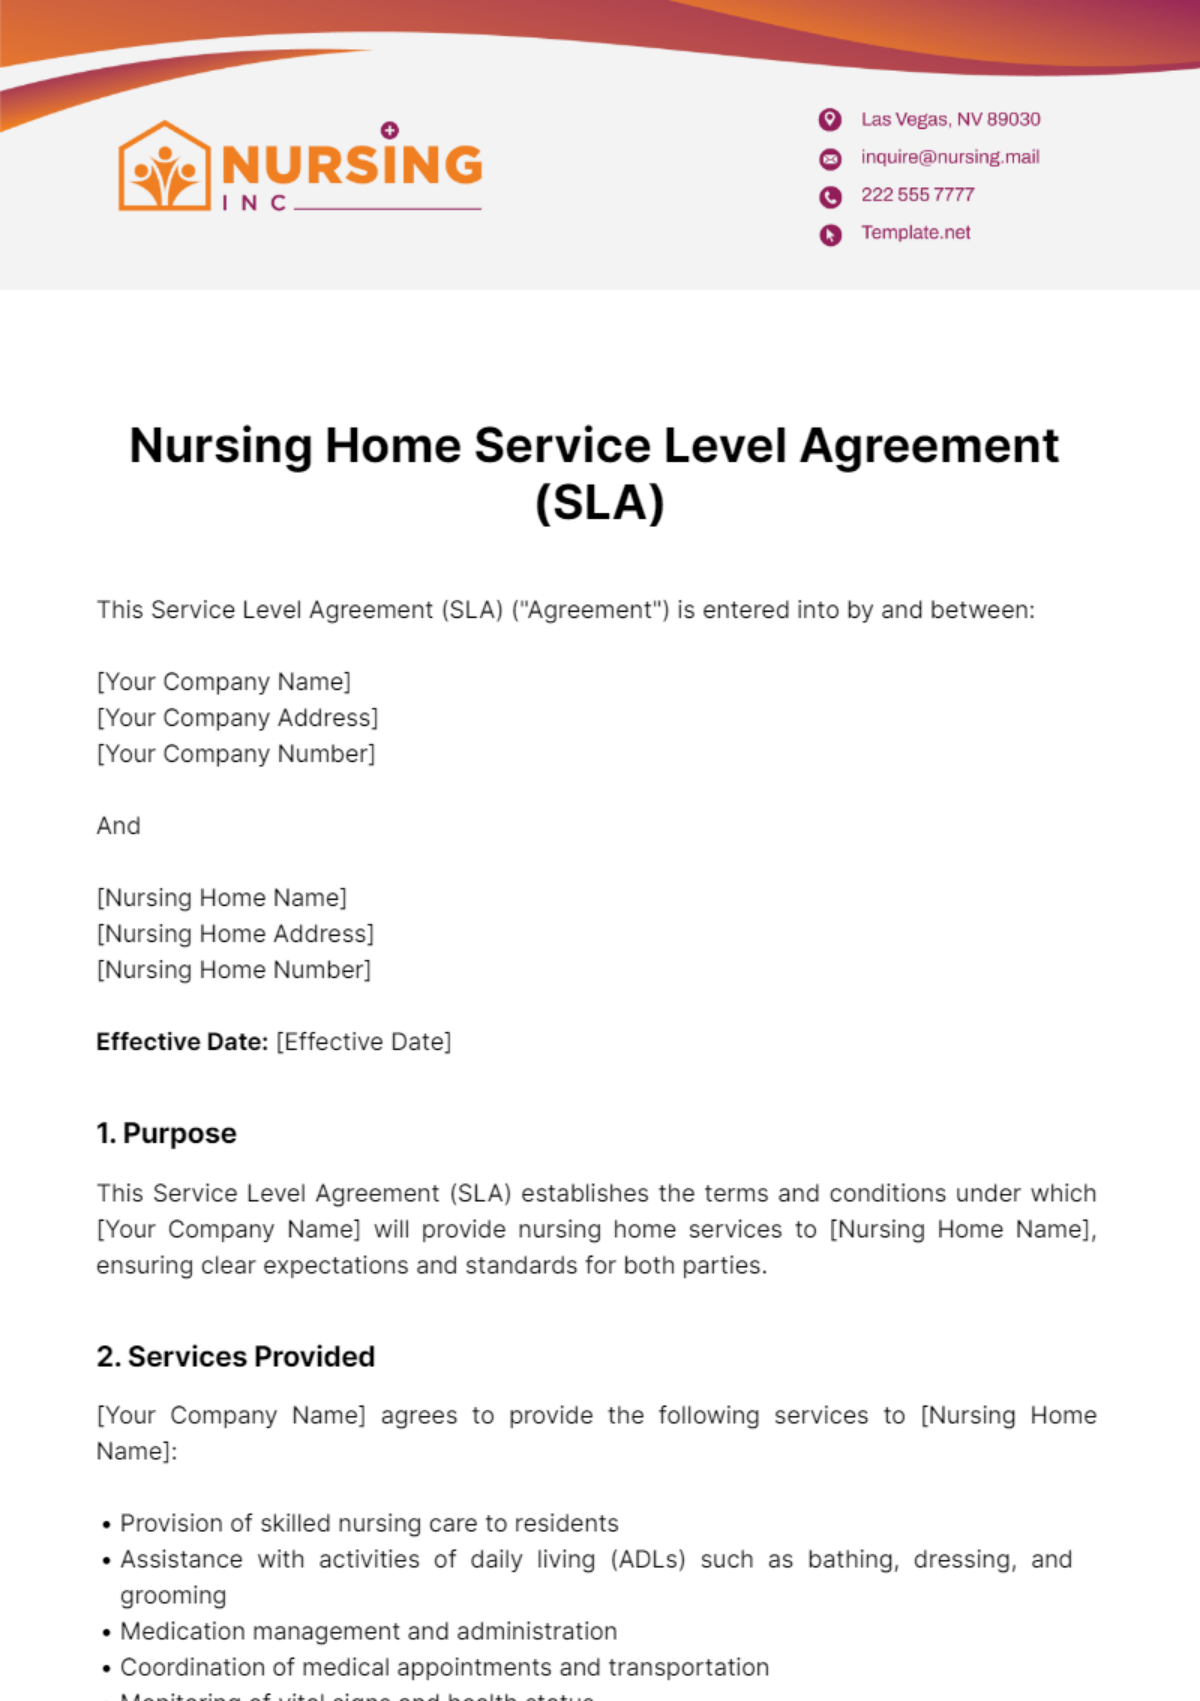 Nursing Home Service Level Agreement (SLA) Template